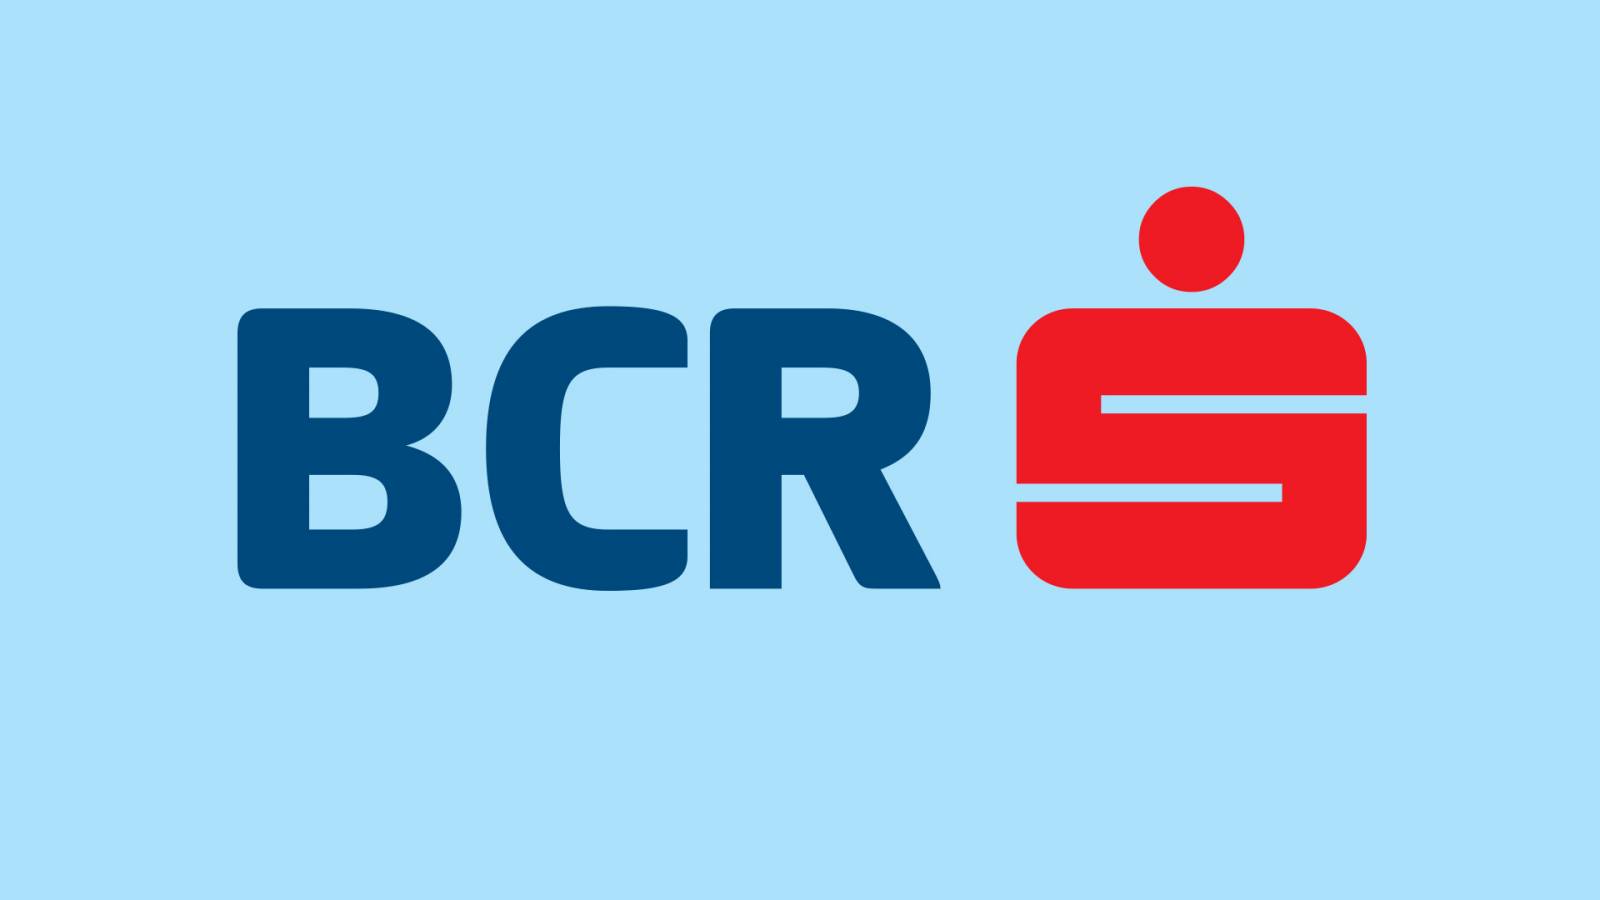 BCR Romania issuers